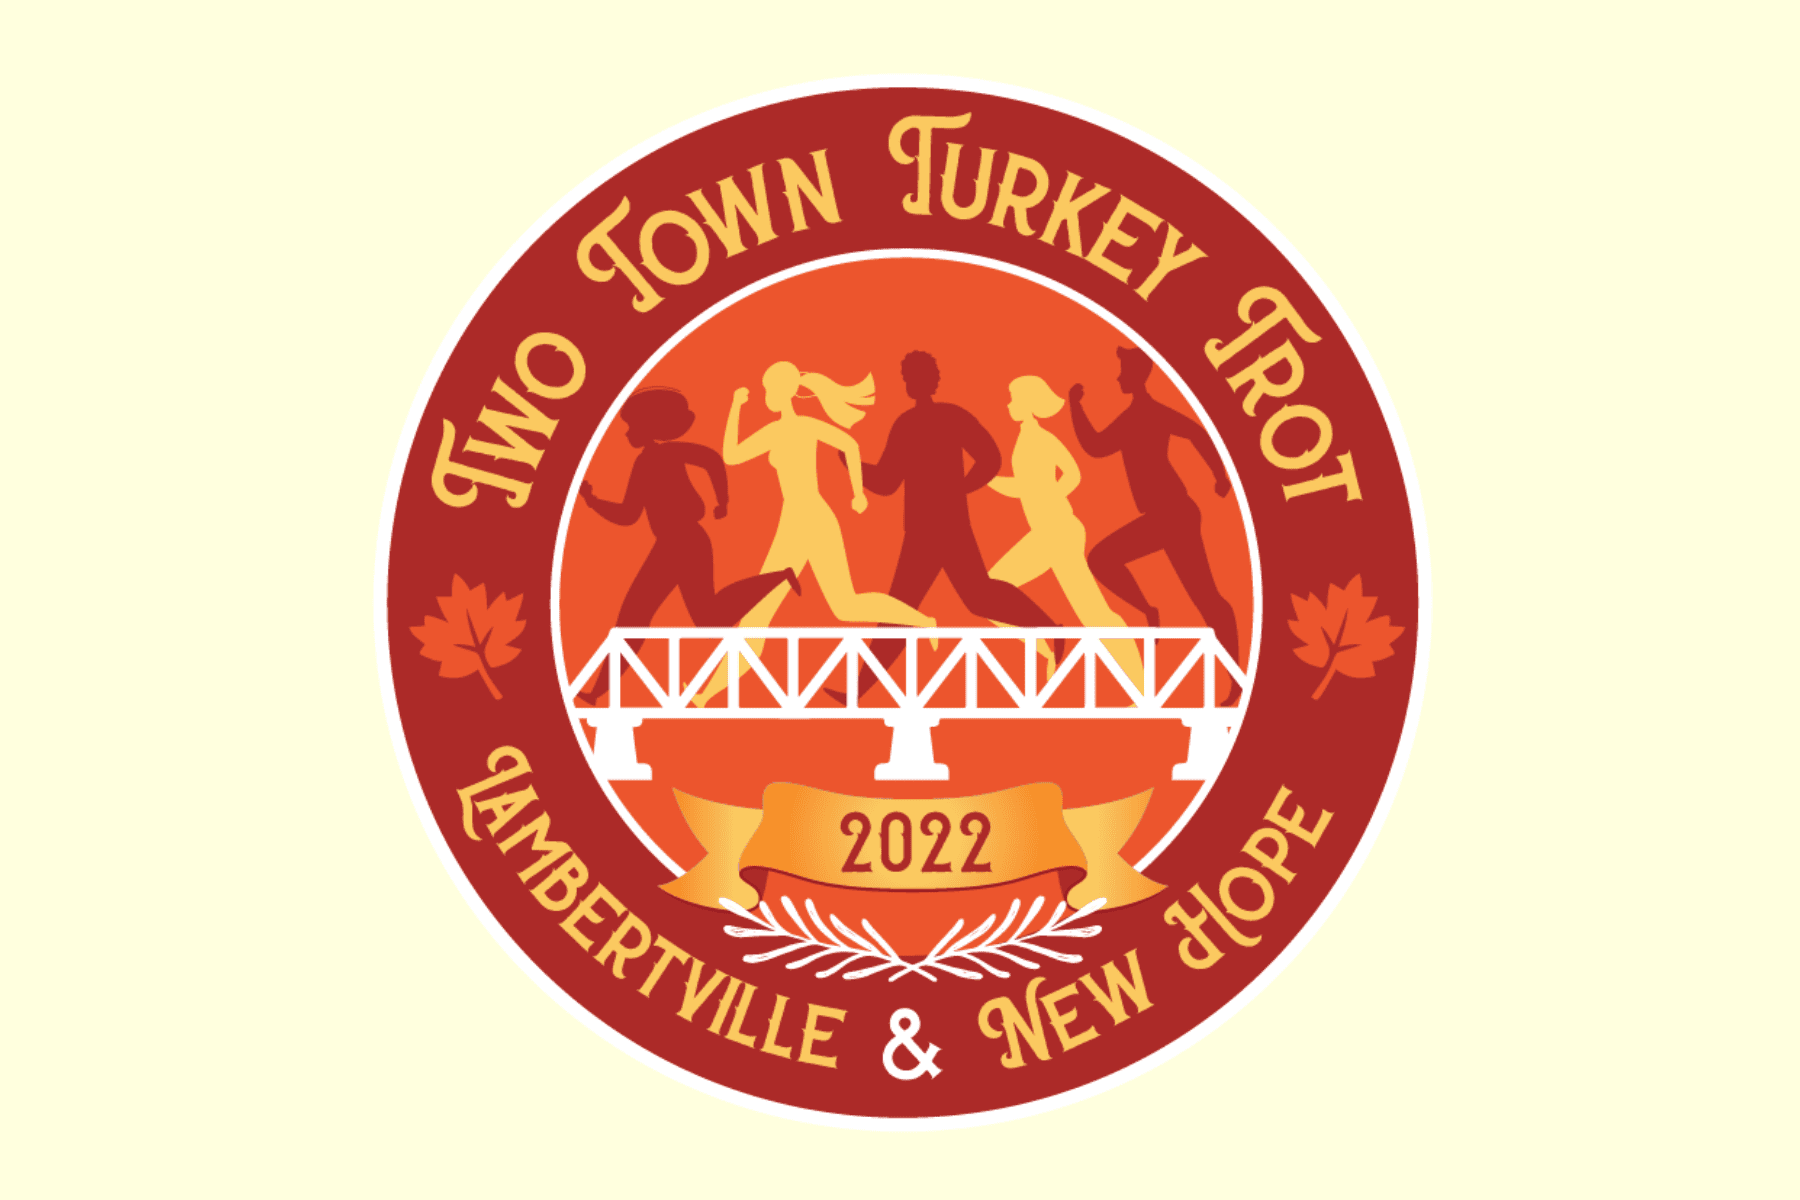 Biondo Creative Sponsors the 2022 Lambertville / New Hope Two Town Turkey Trot!